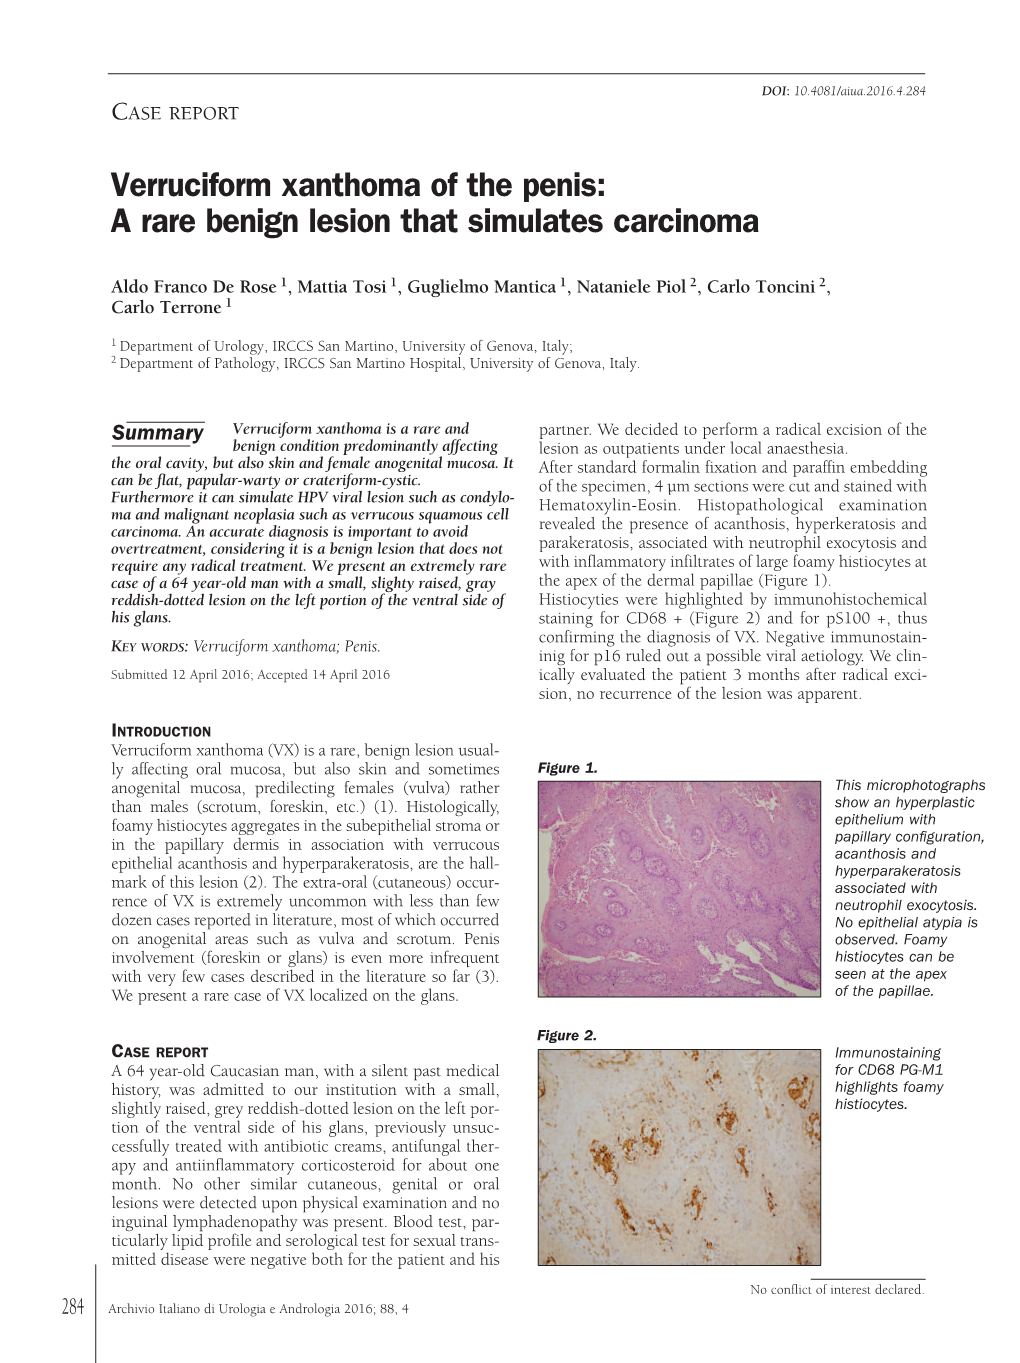 Verruciform Xanthoma of the Penis: a Rare Benign Lesion That Simulates Carcinoma